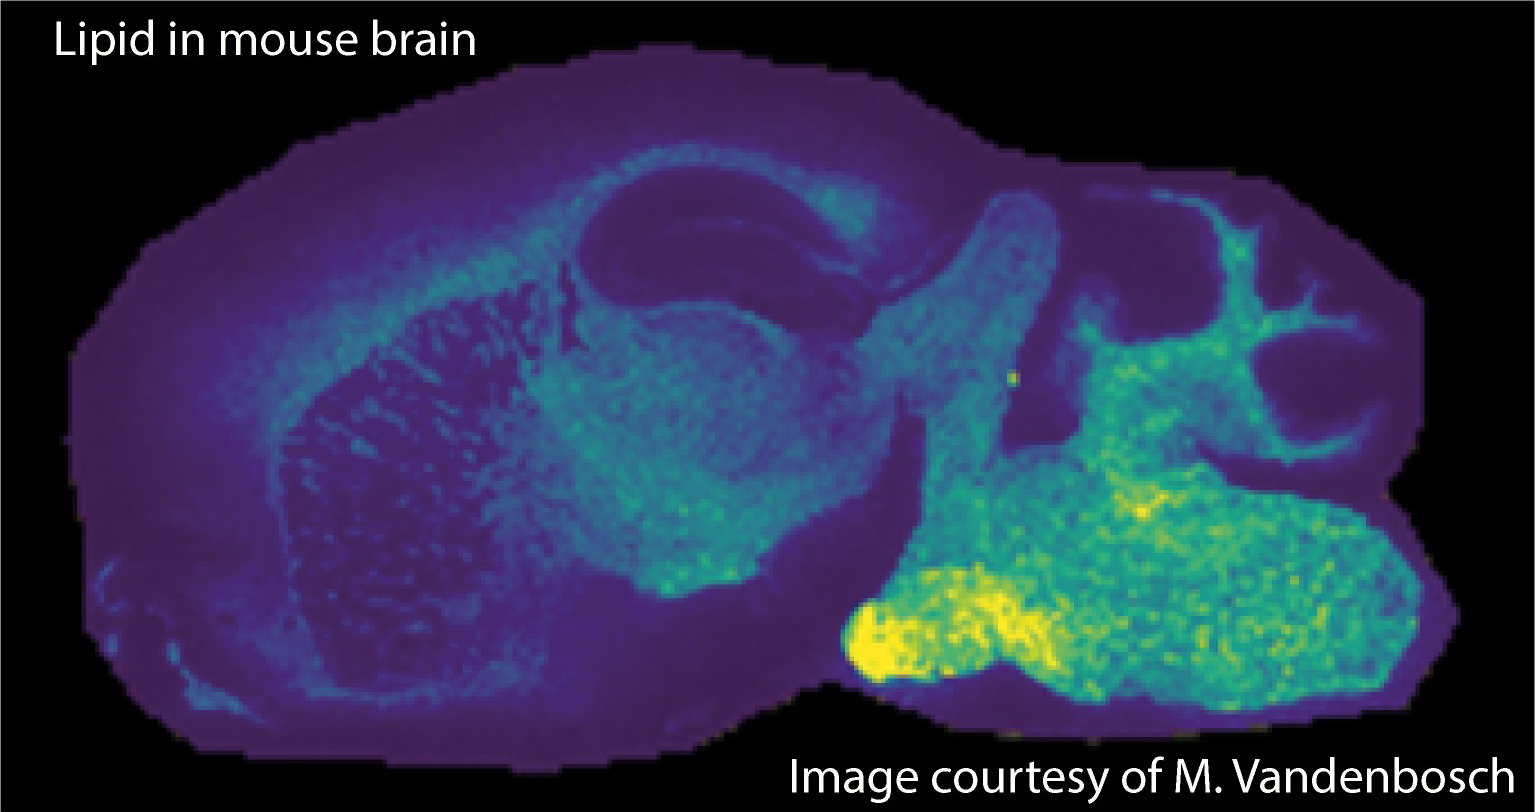 MSI Lipid in mouse brain